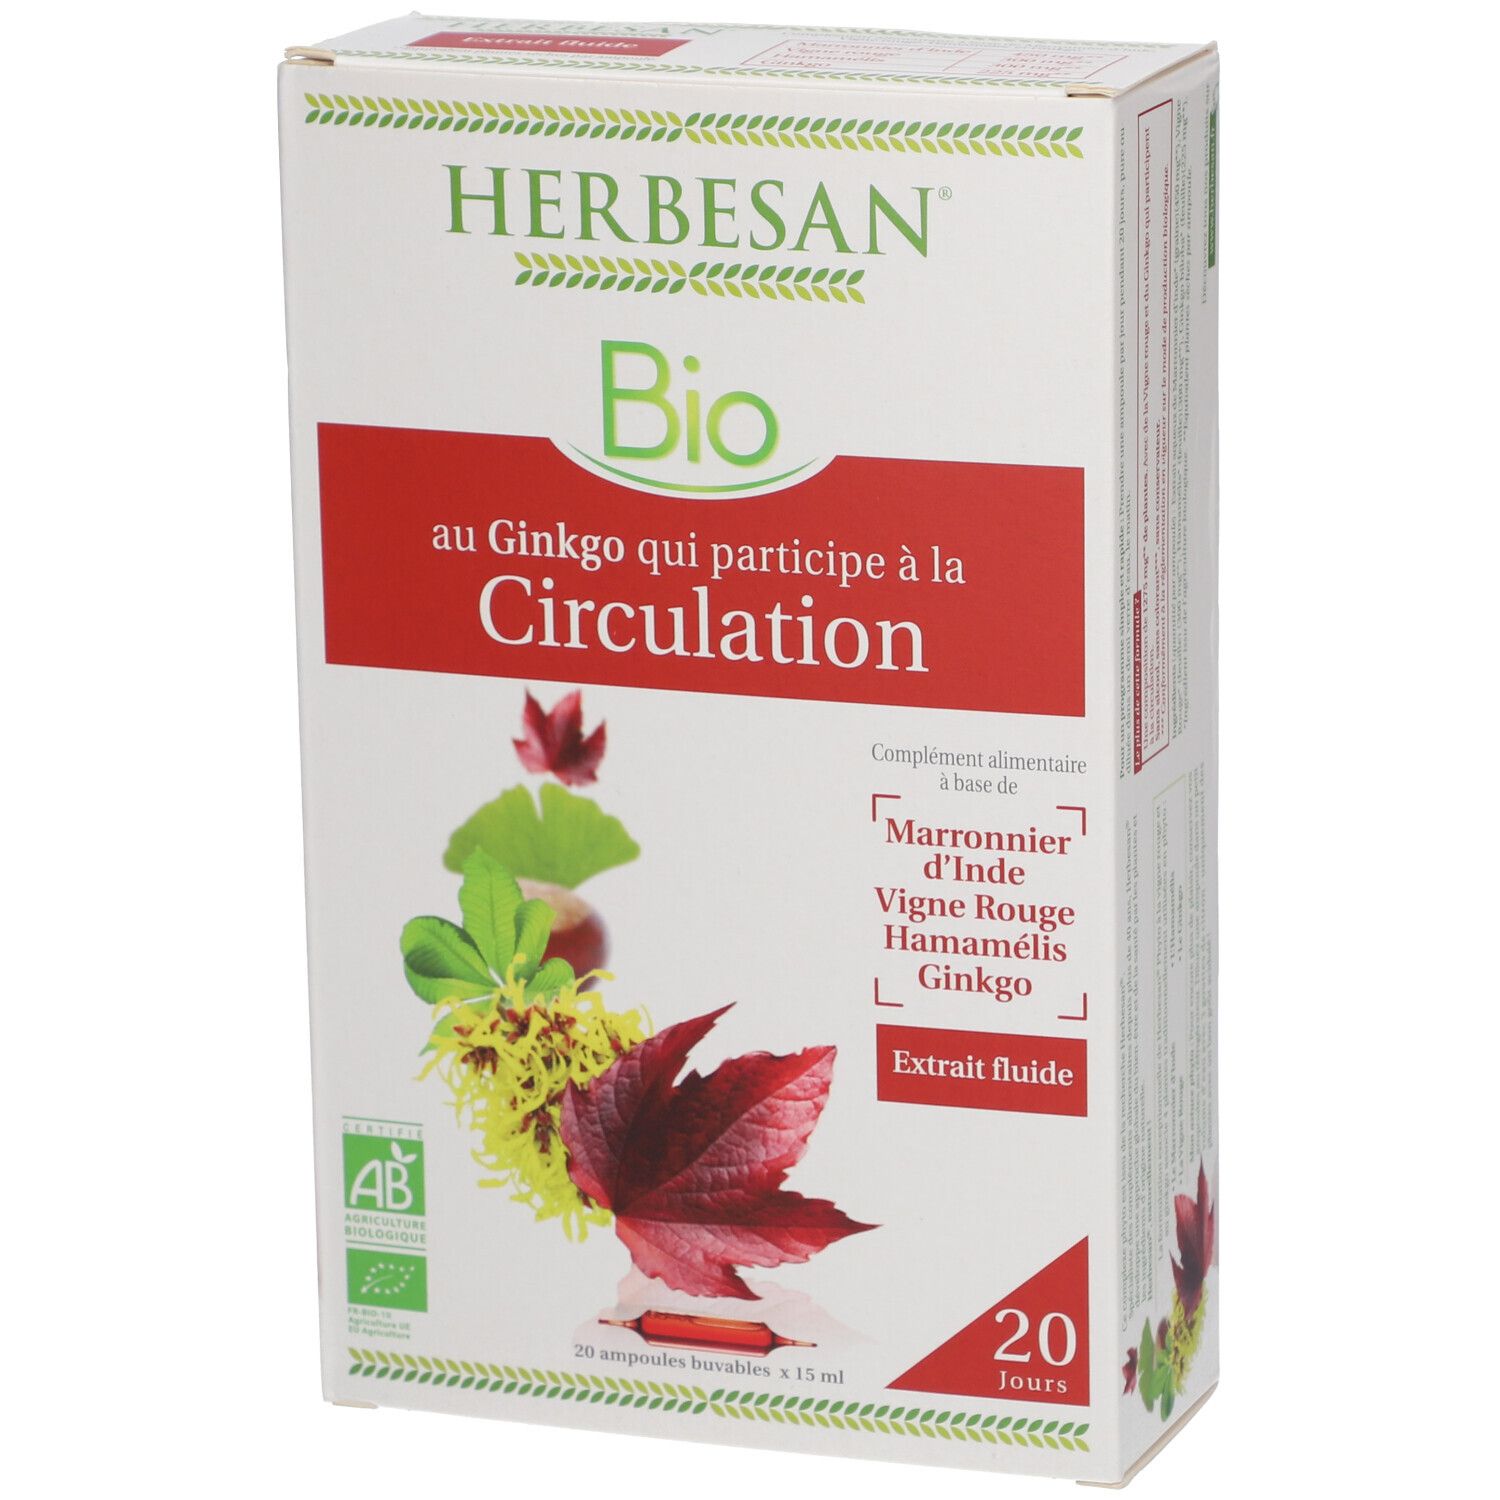 Herbesan® Circulation